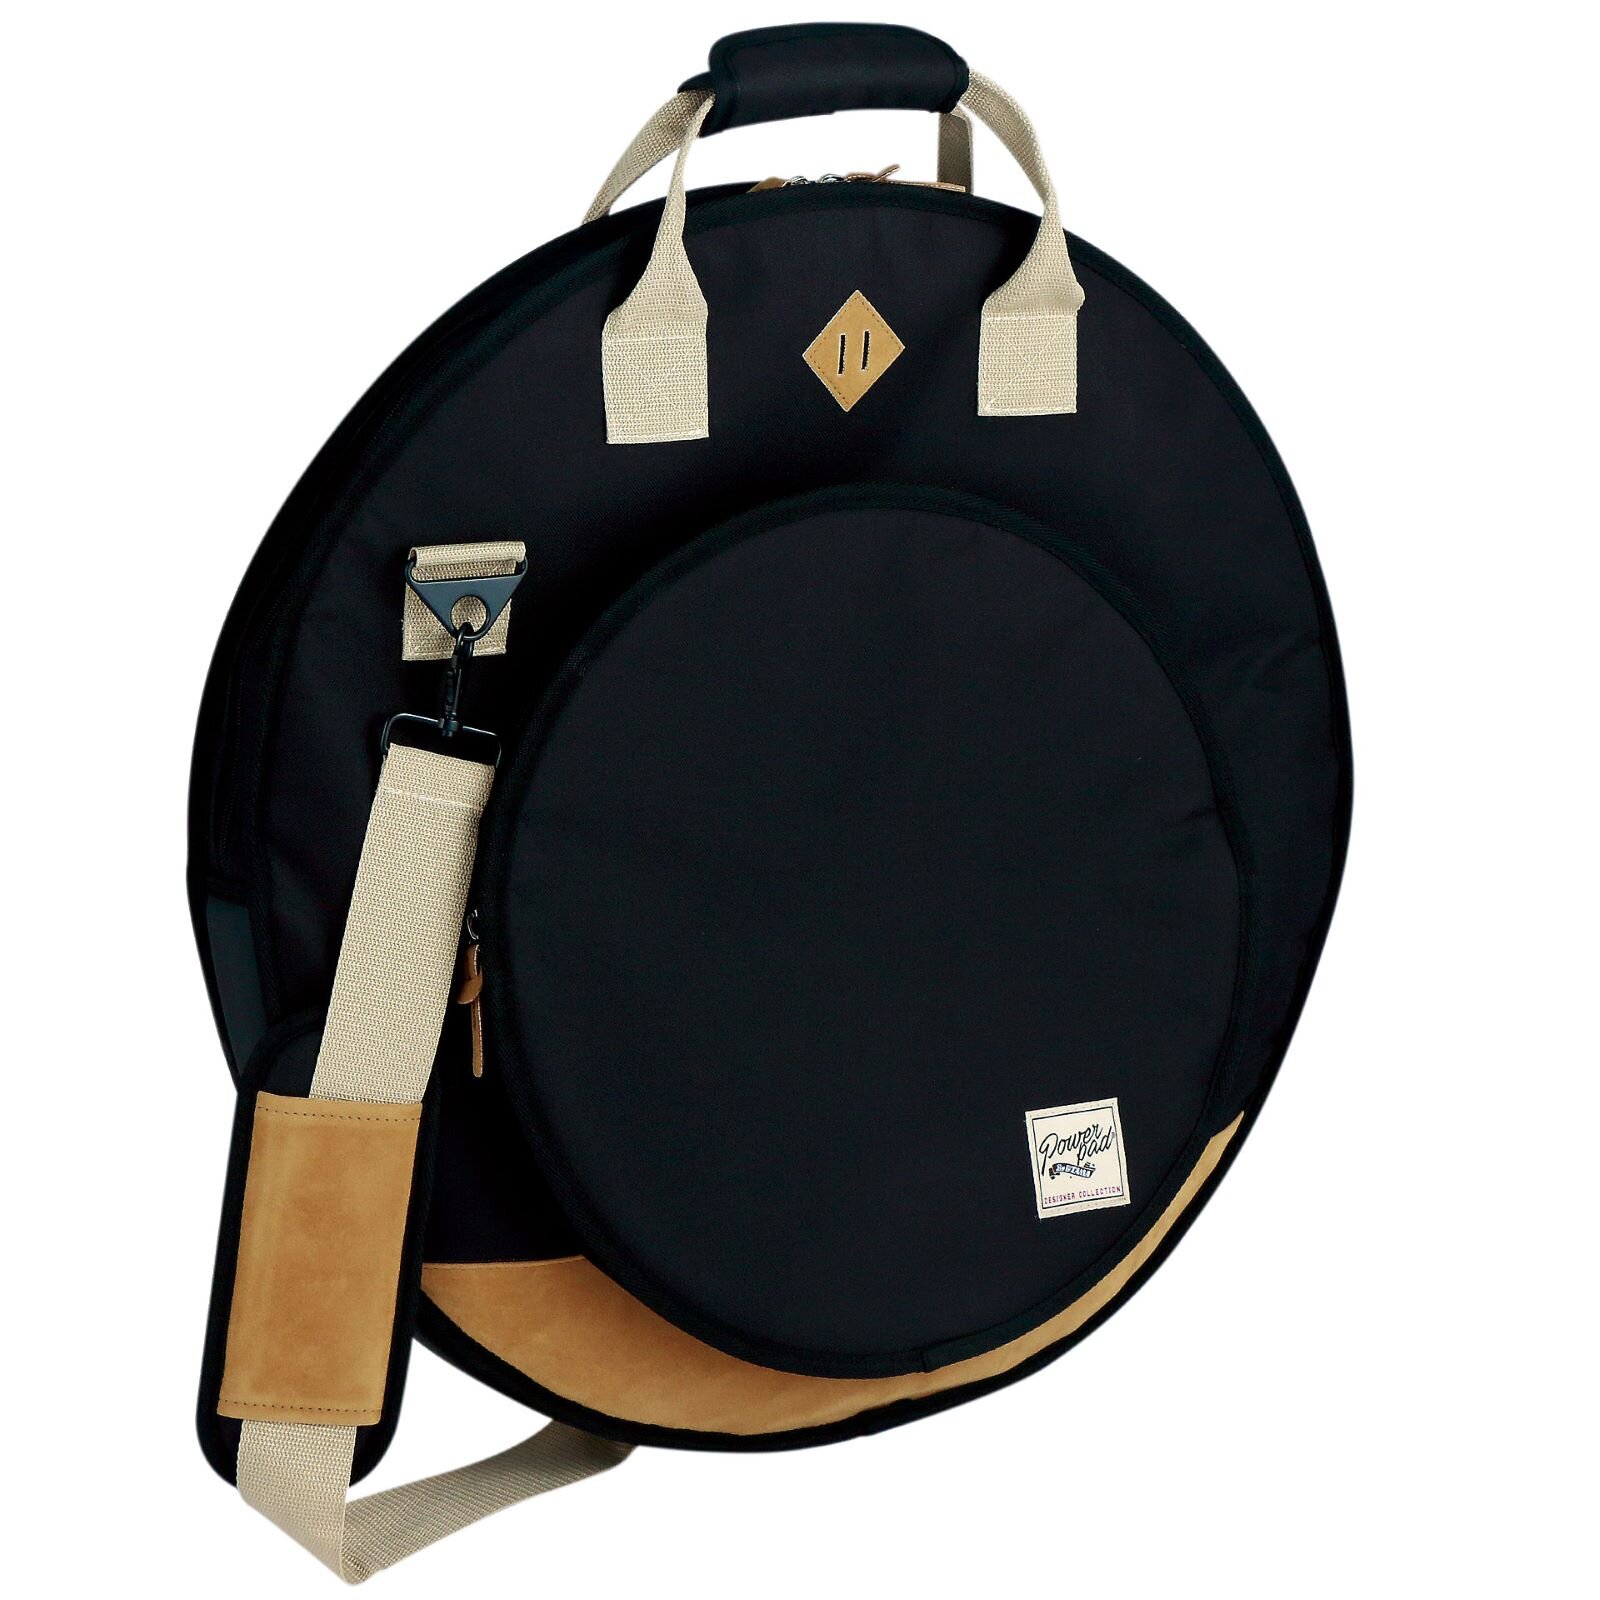 Tama Designer Powerpad Cymbal Bag Black (TCB22-BK) : photo 1